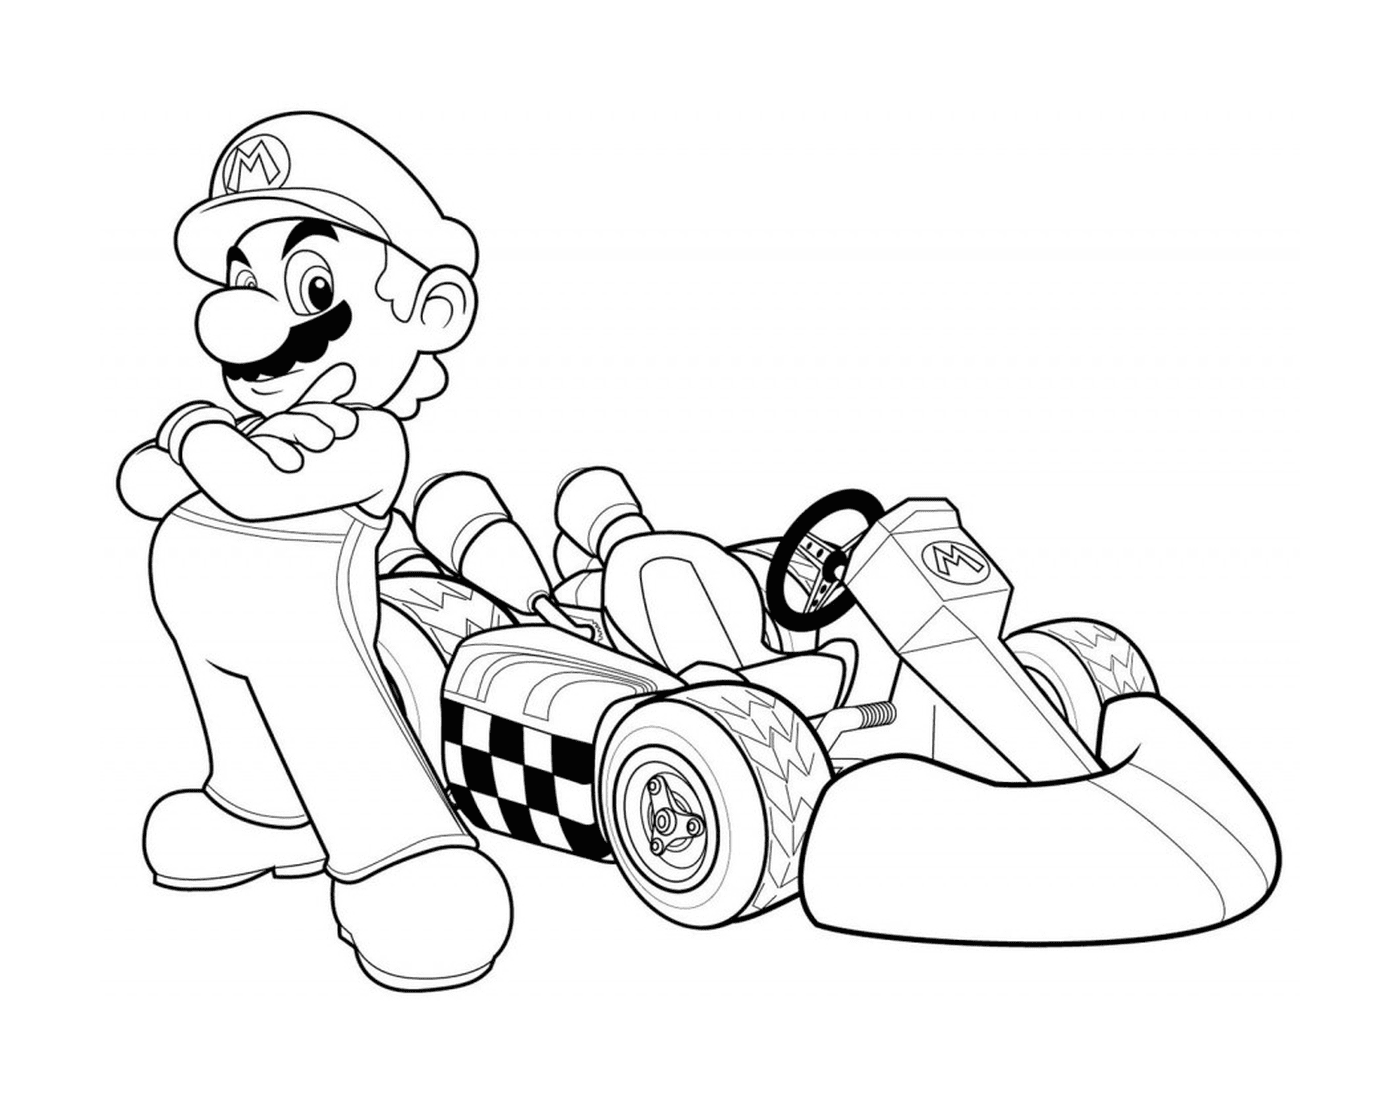  Mario Kart: Formula 1 car 